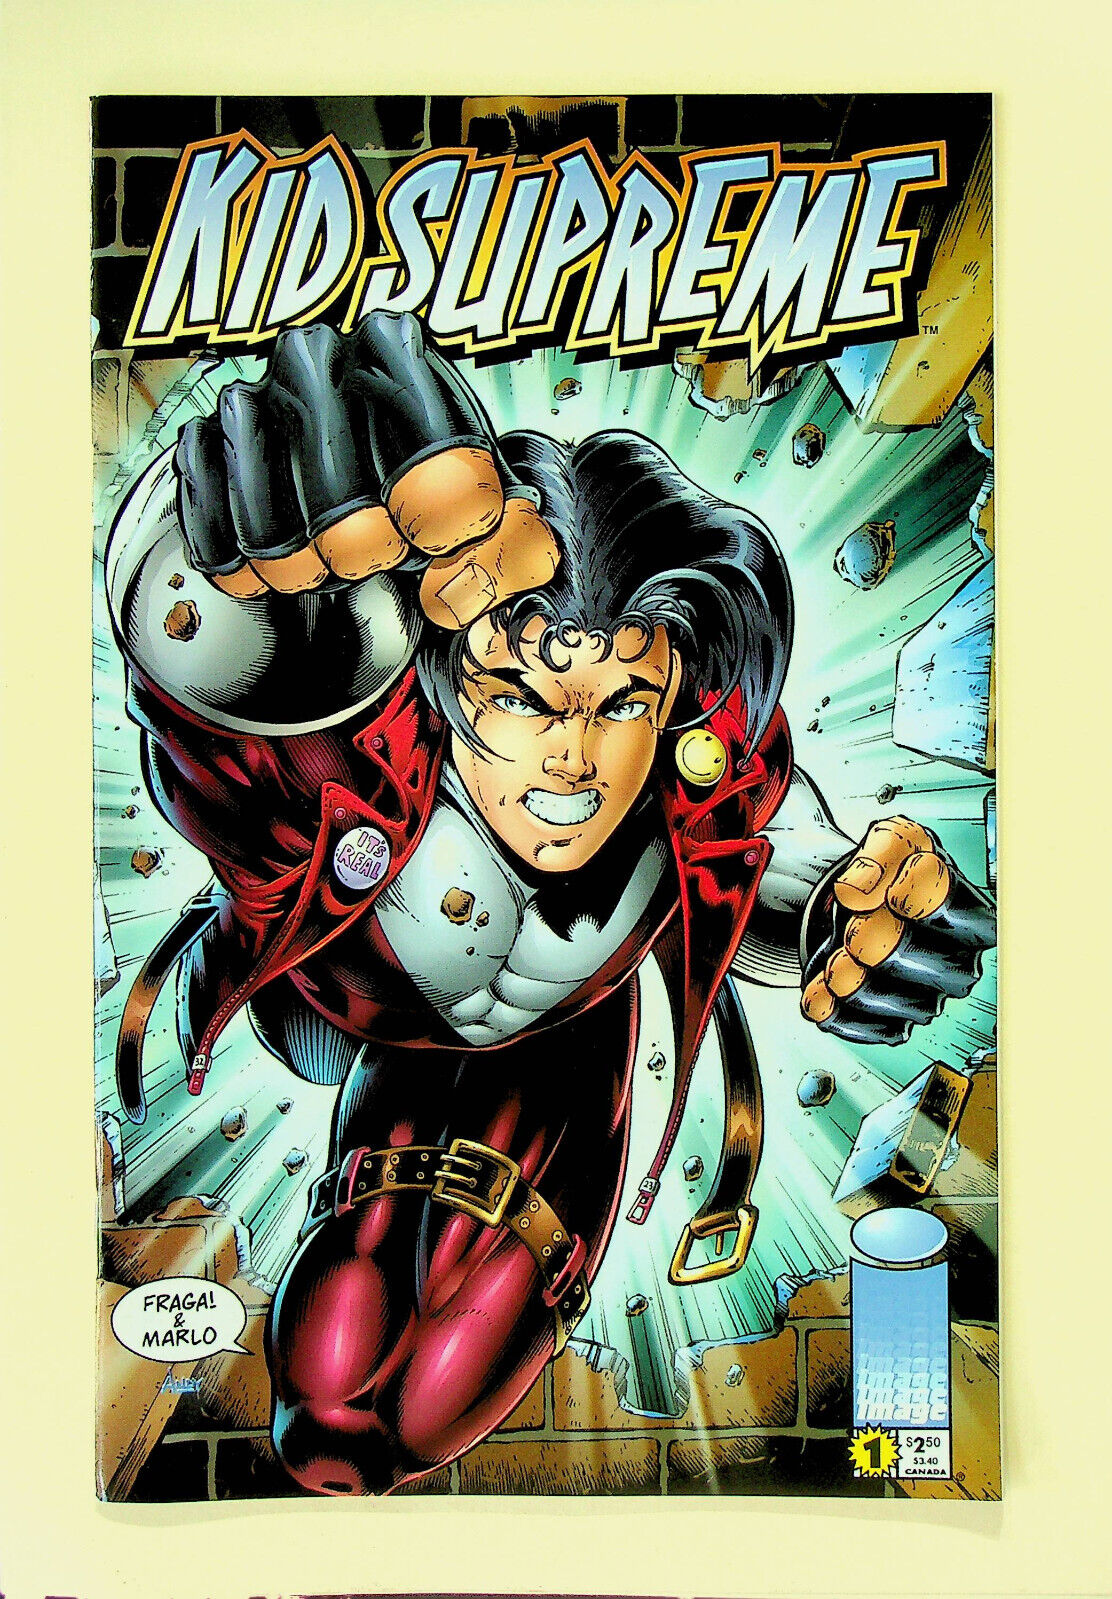 Kid Supreme #1 (Mar 1996, Image) - Cover A - Near Mint